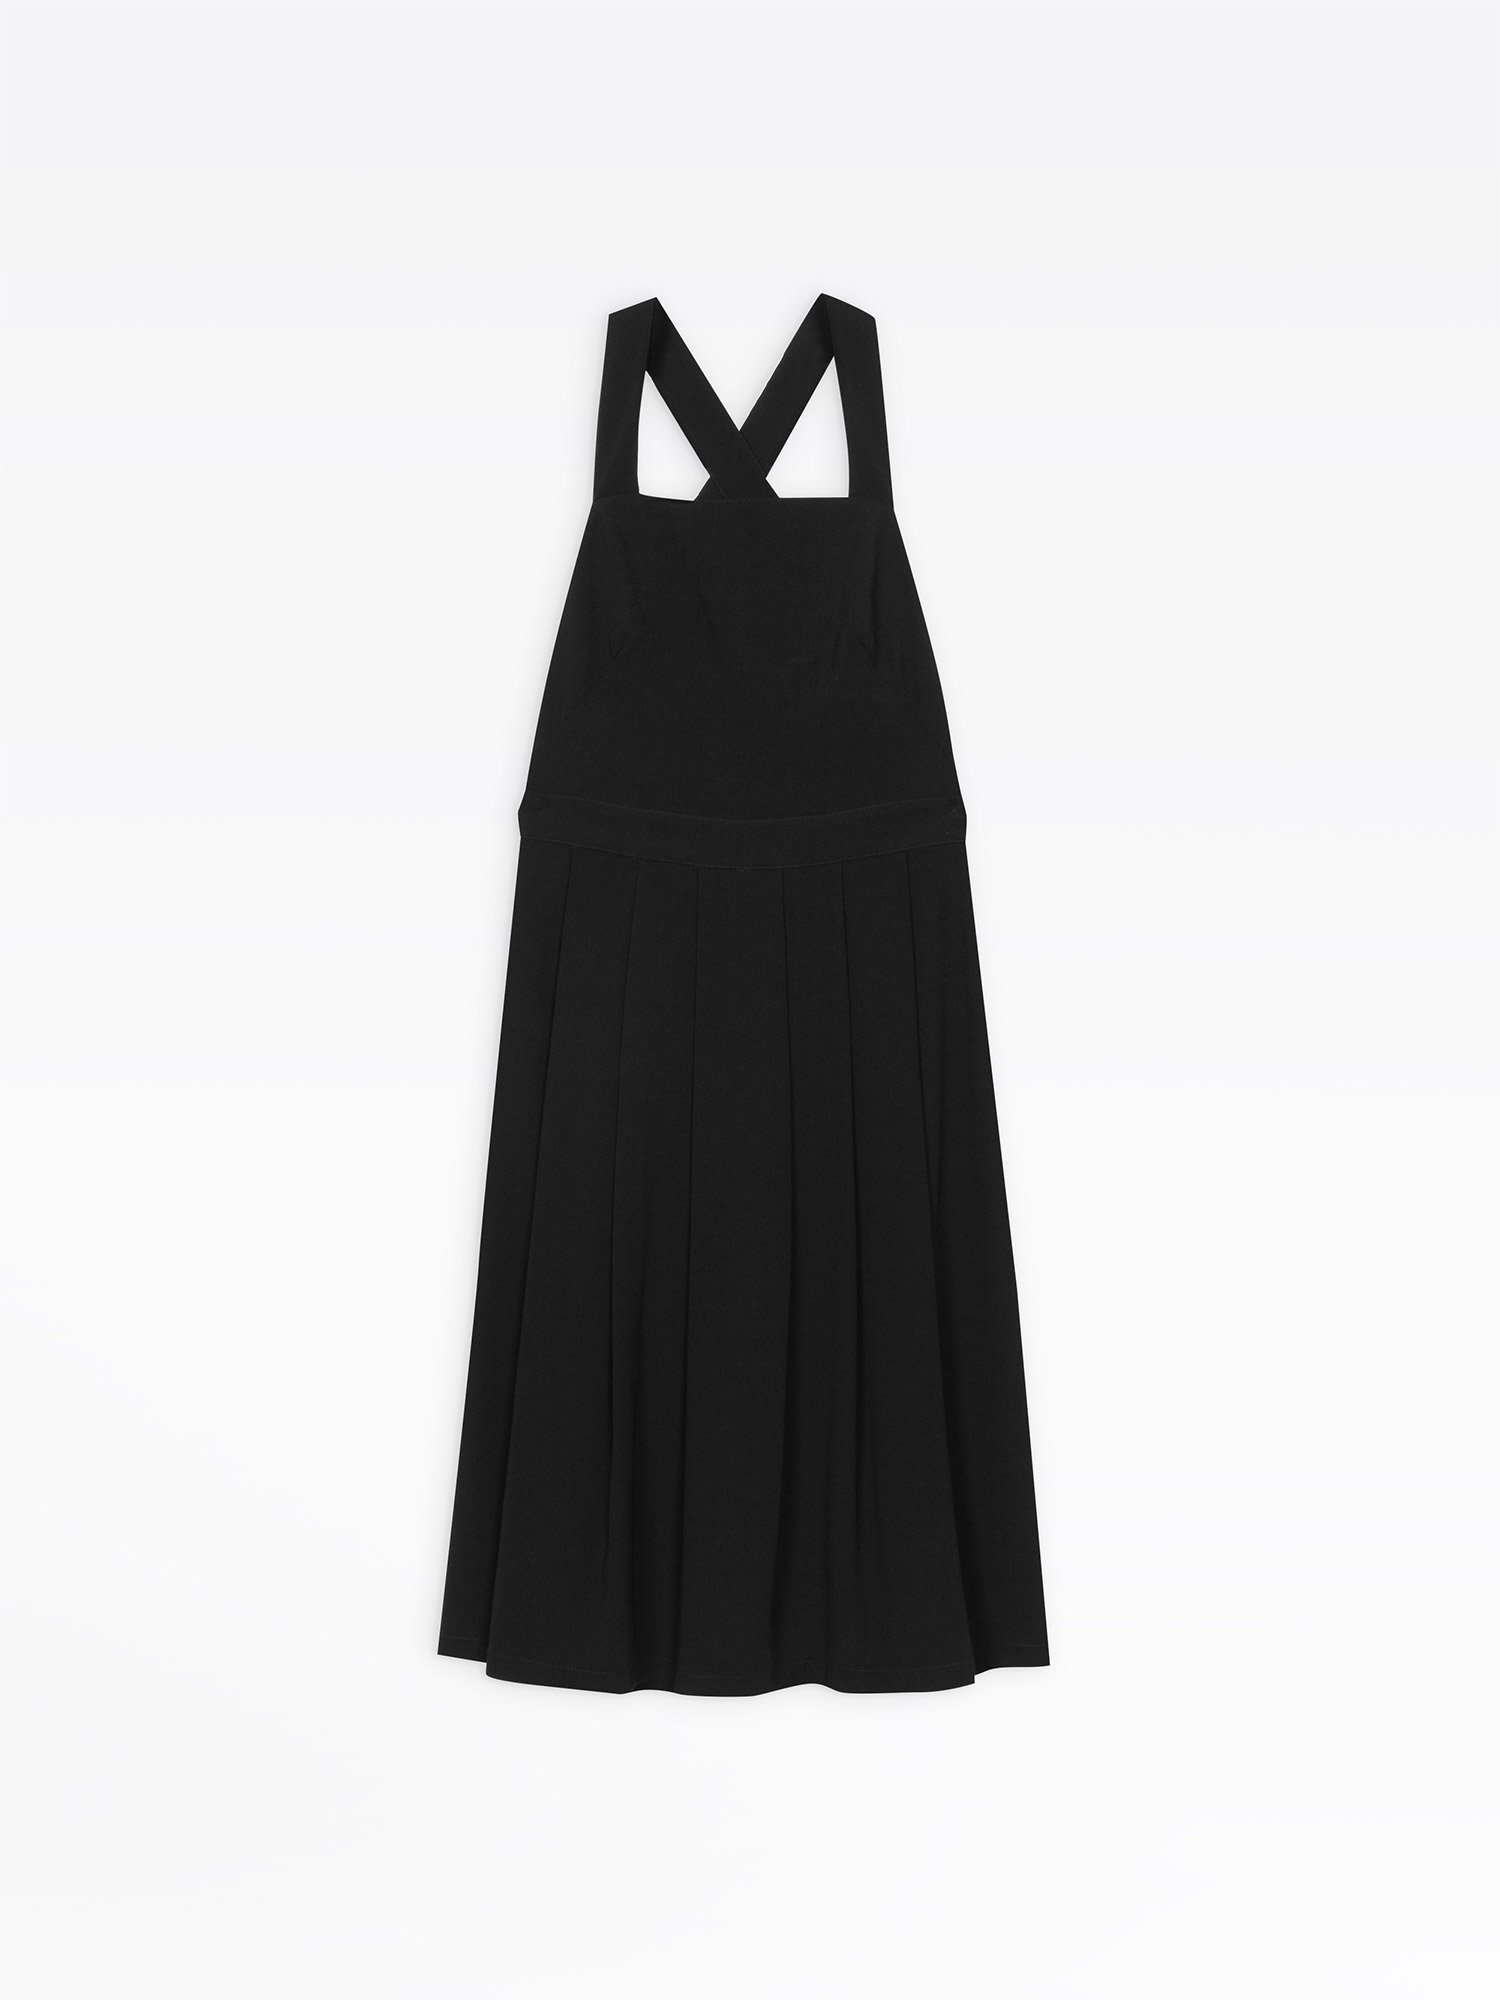 black and white dungaree dress